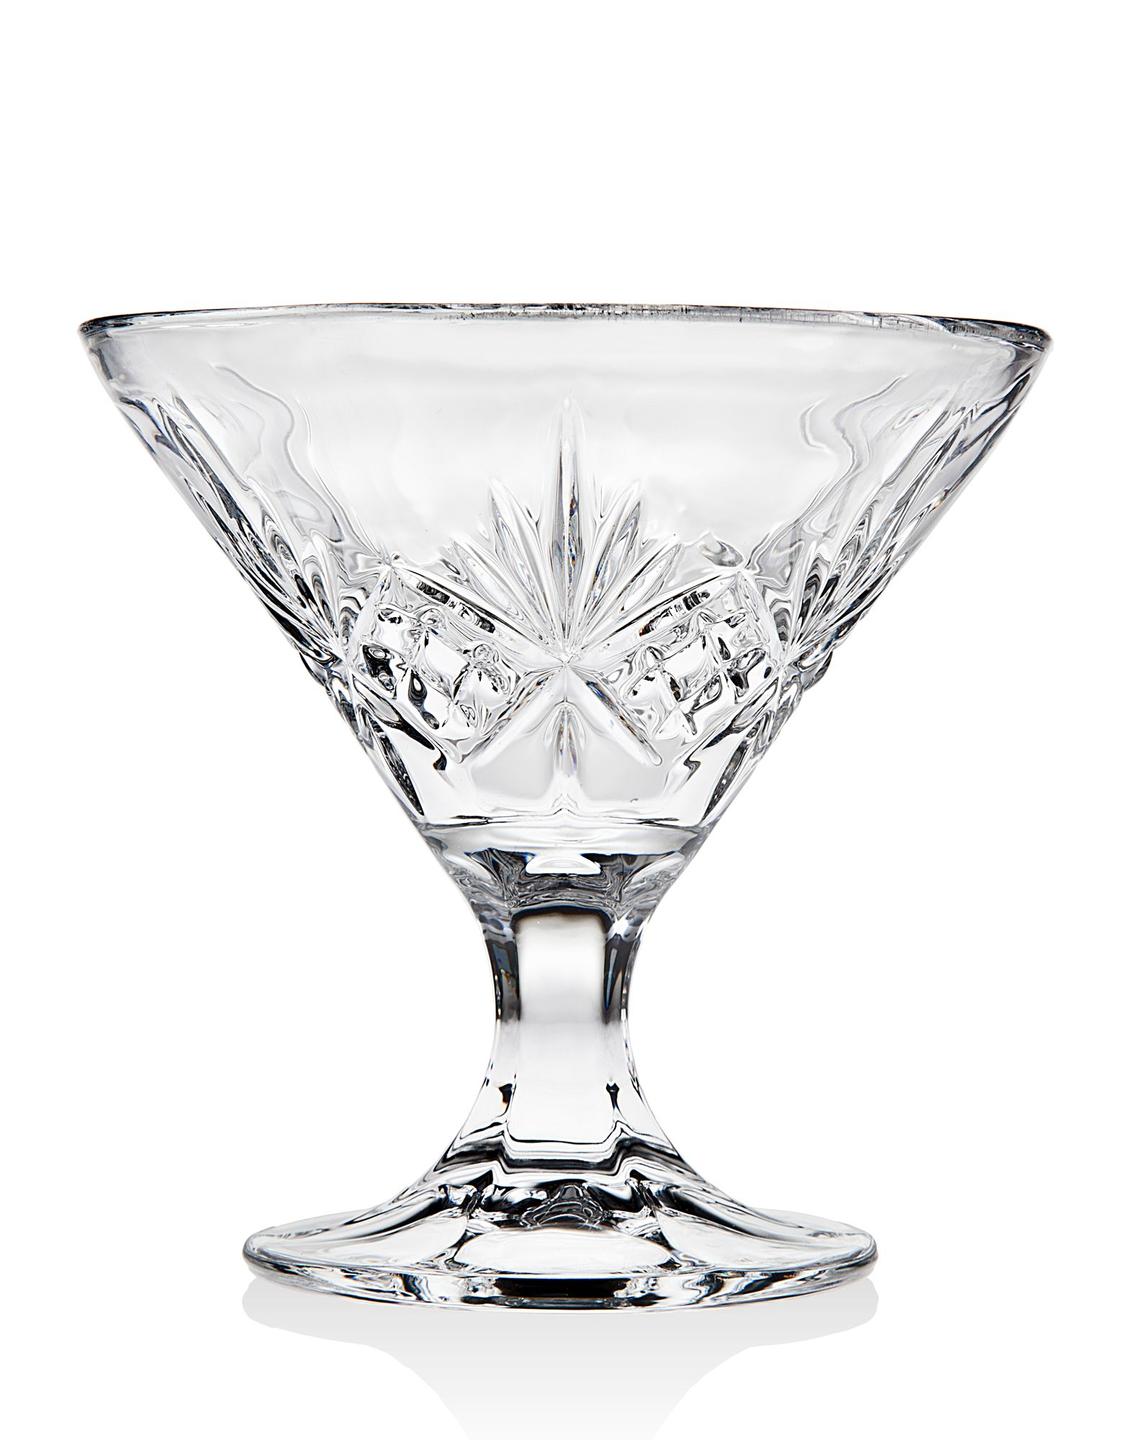 Las mejores copas de Martini: Godinger Dublin Copa de Martini de 5 onzas